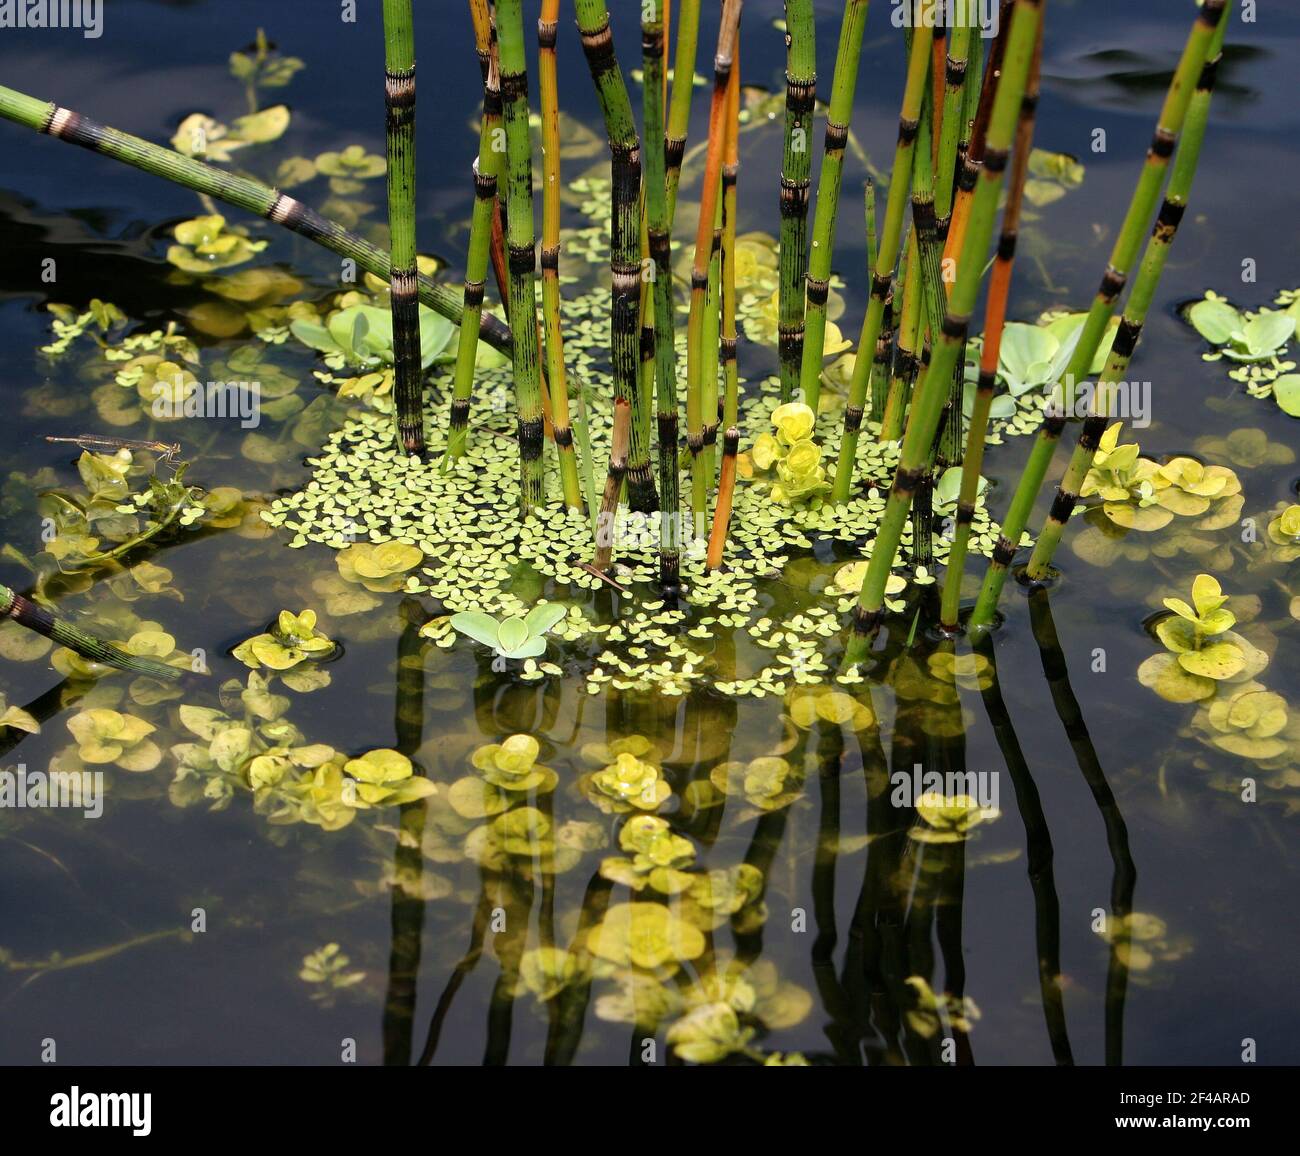 Aquatic vegetation in a pond. Stock Photo